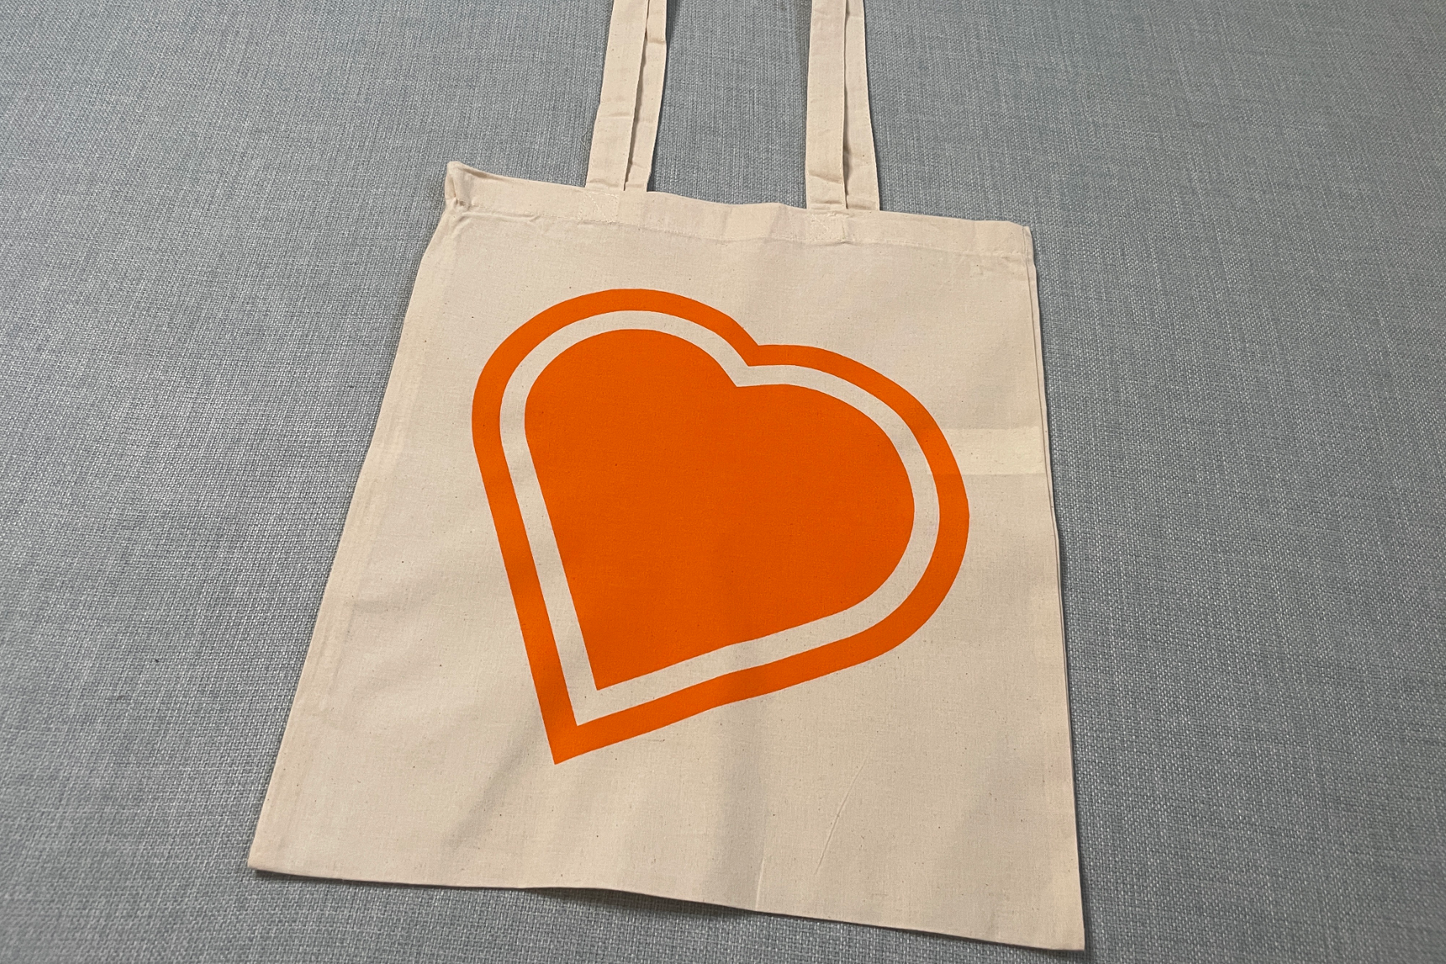 A Bounceback Food CIC Tote Bag with Orange heart